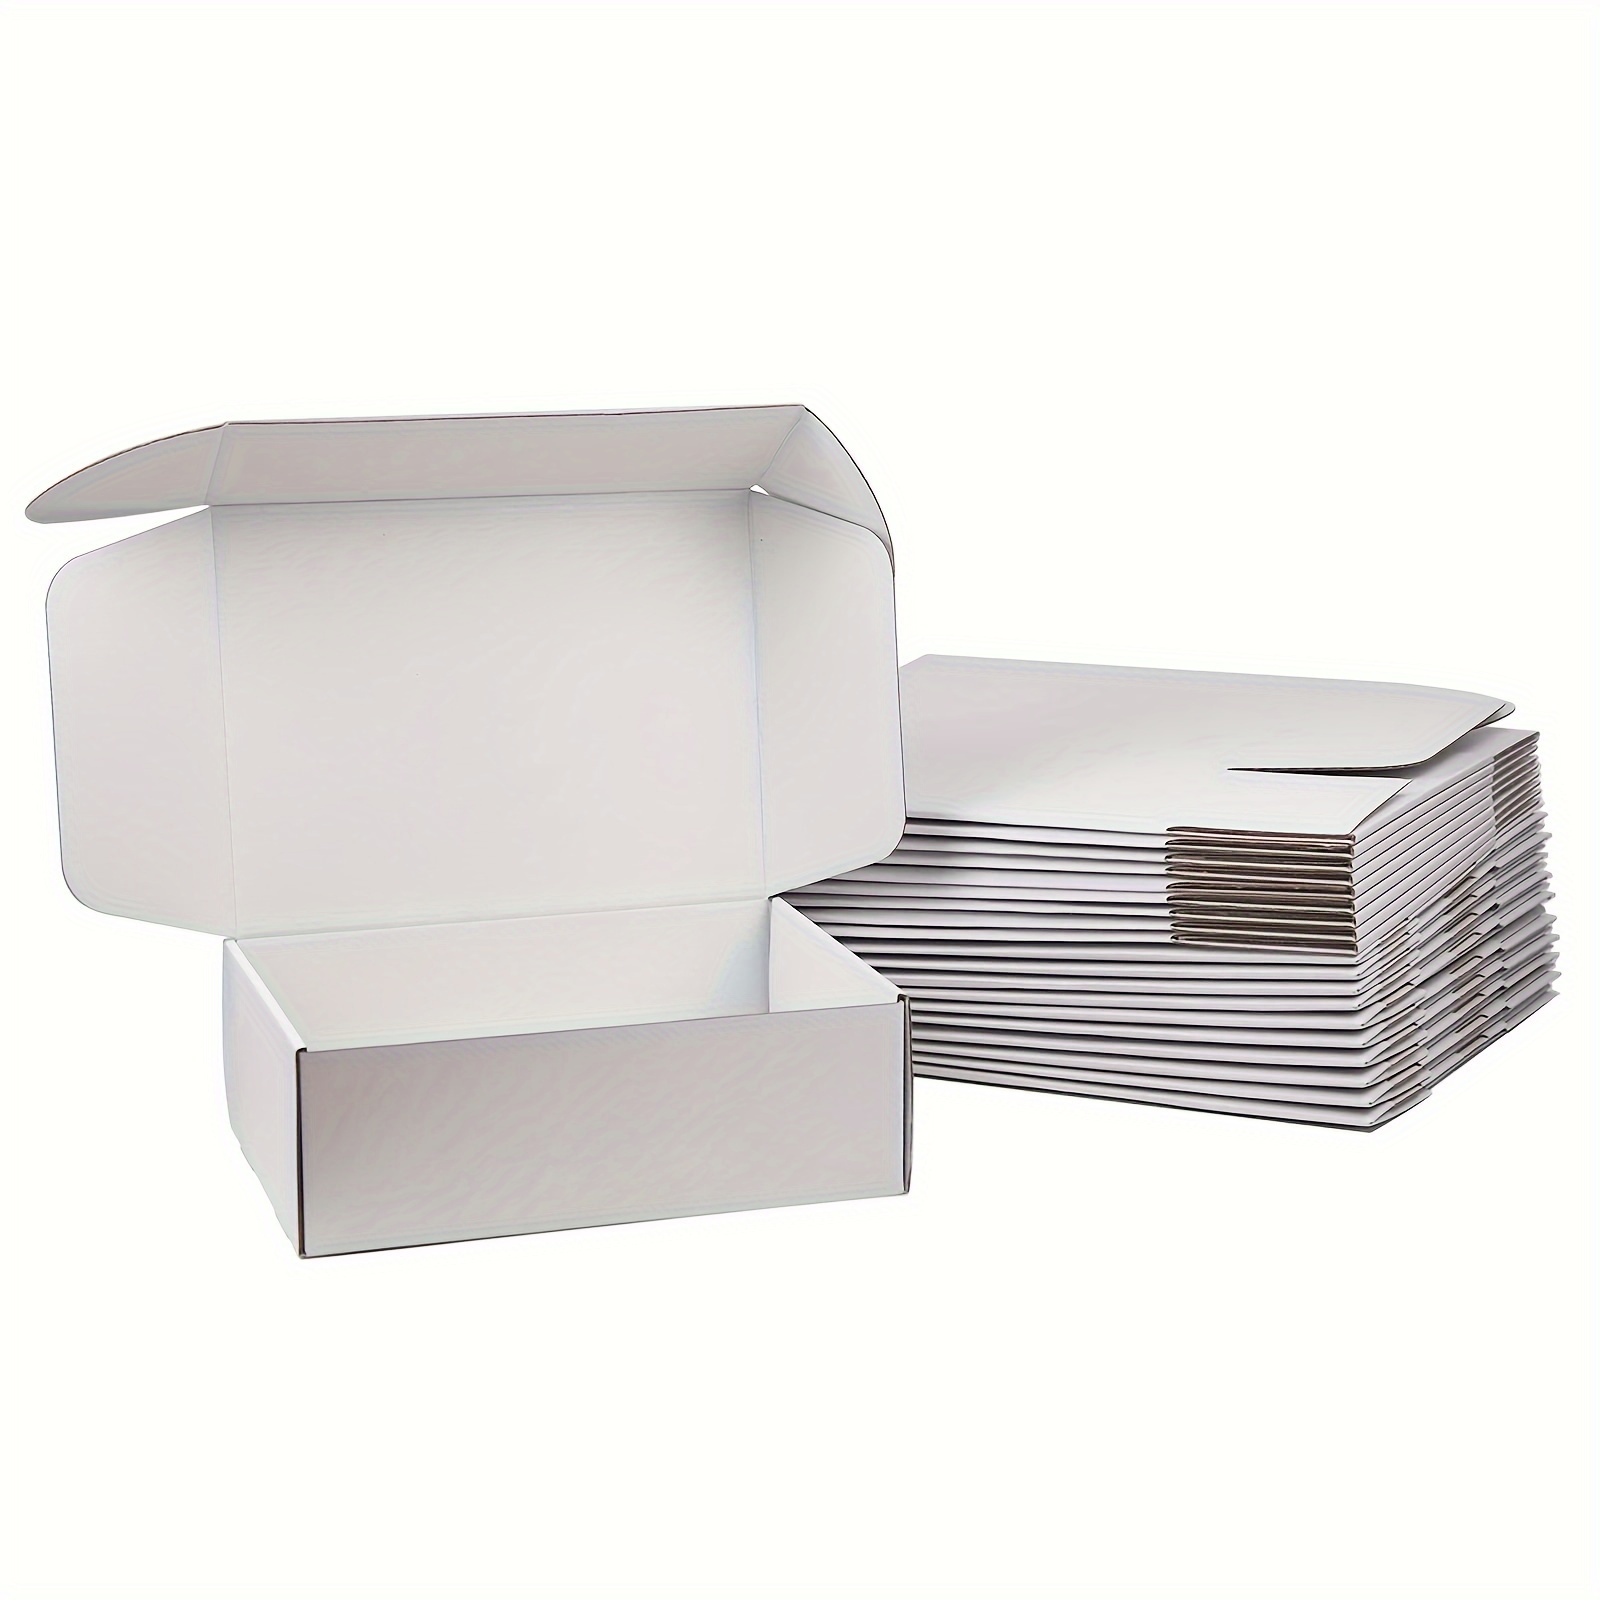 Caja Cartón Blanco Para Ecommerce Mudanza 20x20x20 X 10u